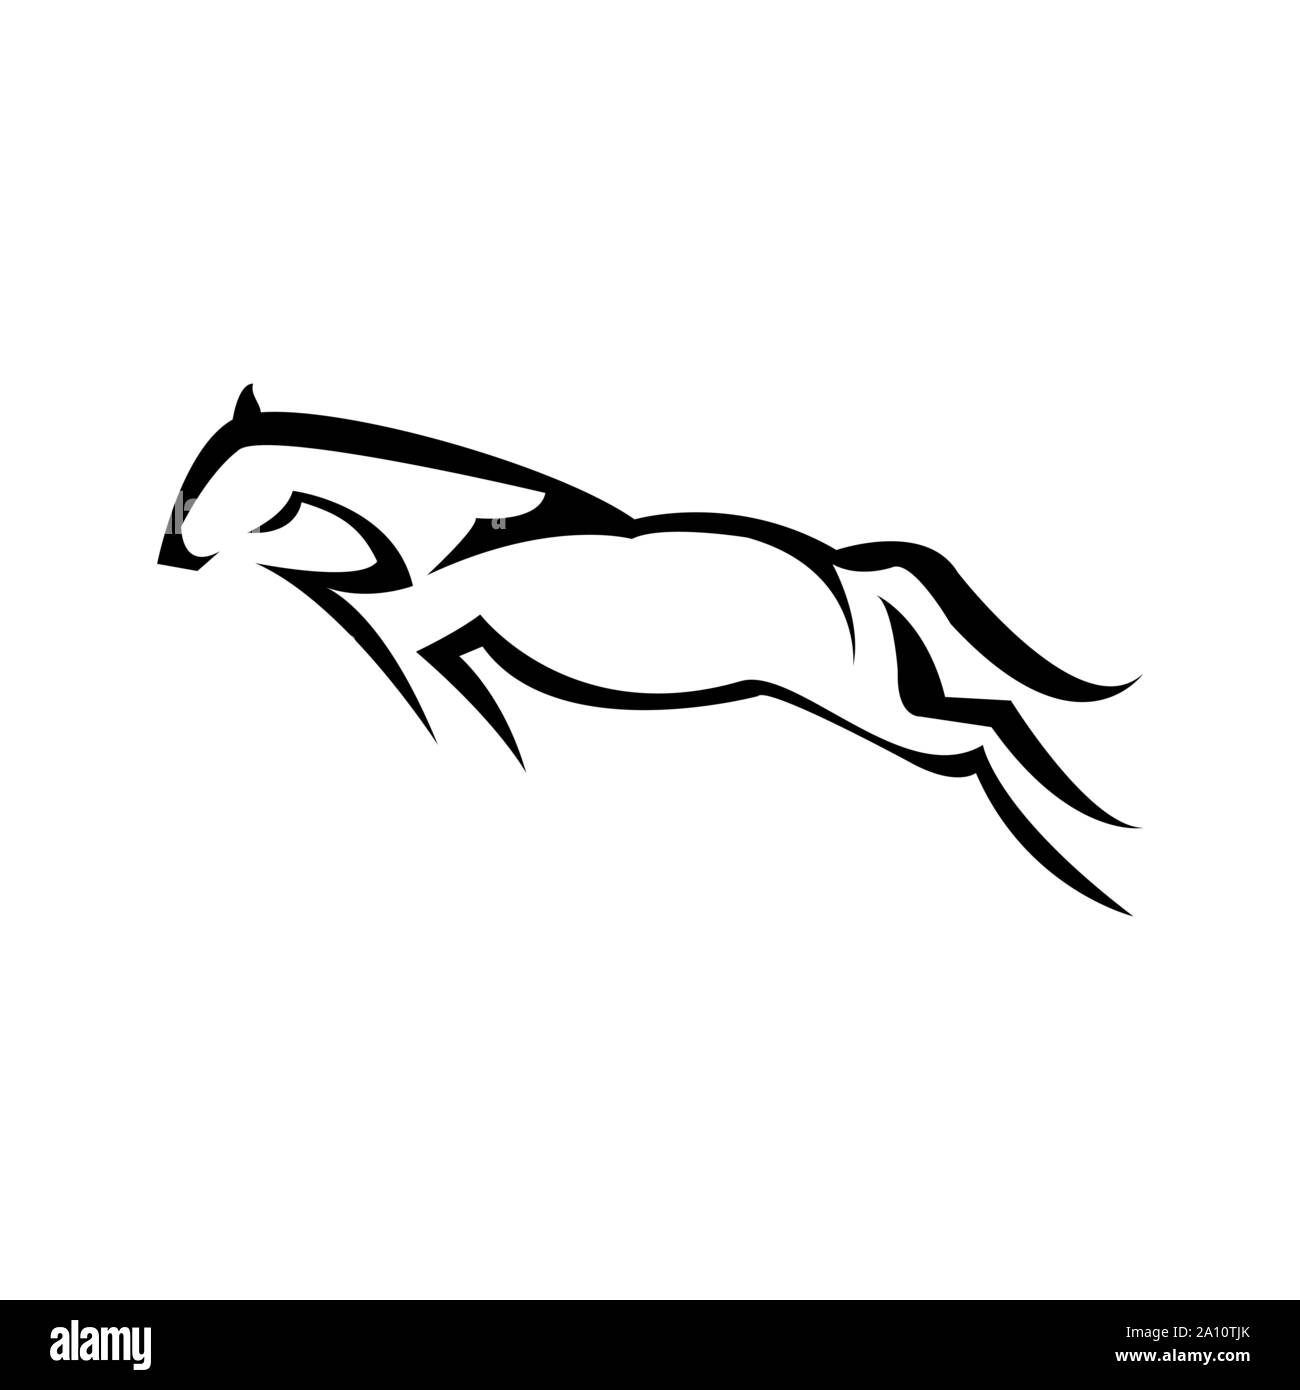 Horse Logo Template Vector illustration design. emblem of horse head on white background. Stock Vector